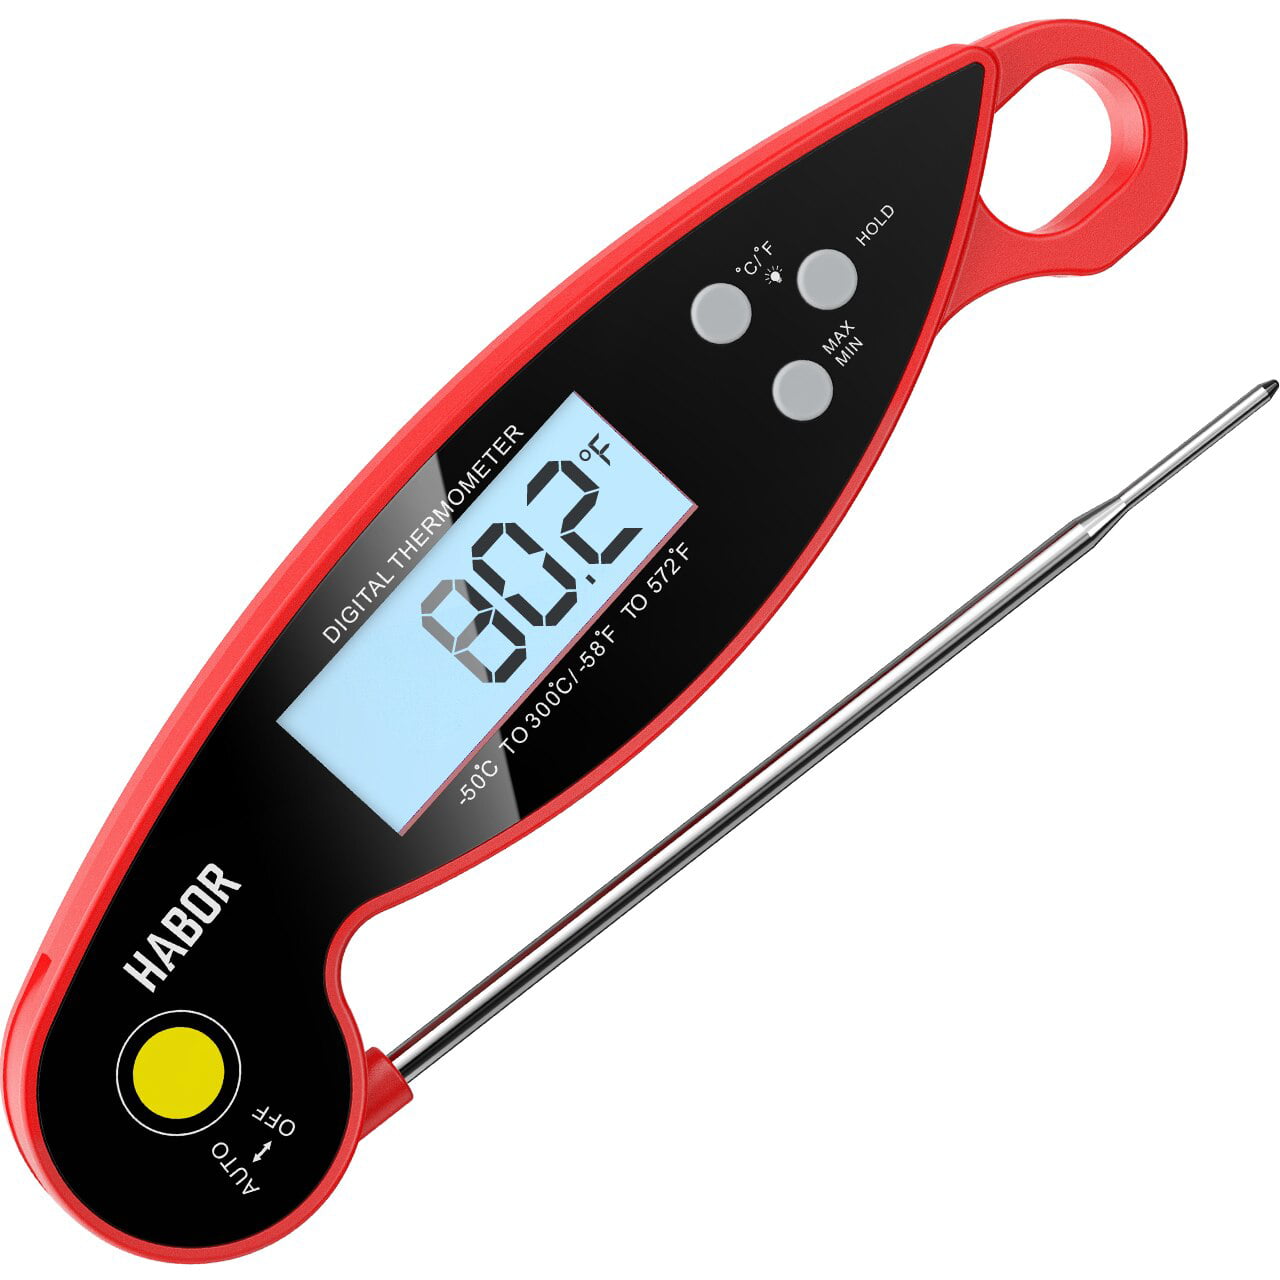 Waterproof Digital Meat Thermometer Probe Instant Read Kitchen Food Measure Tool 